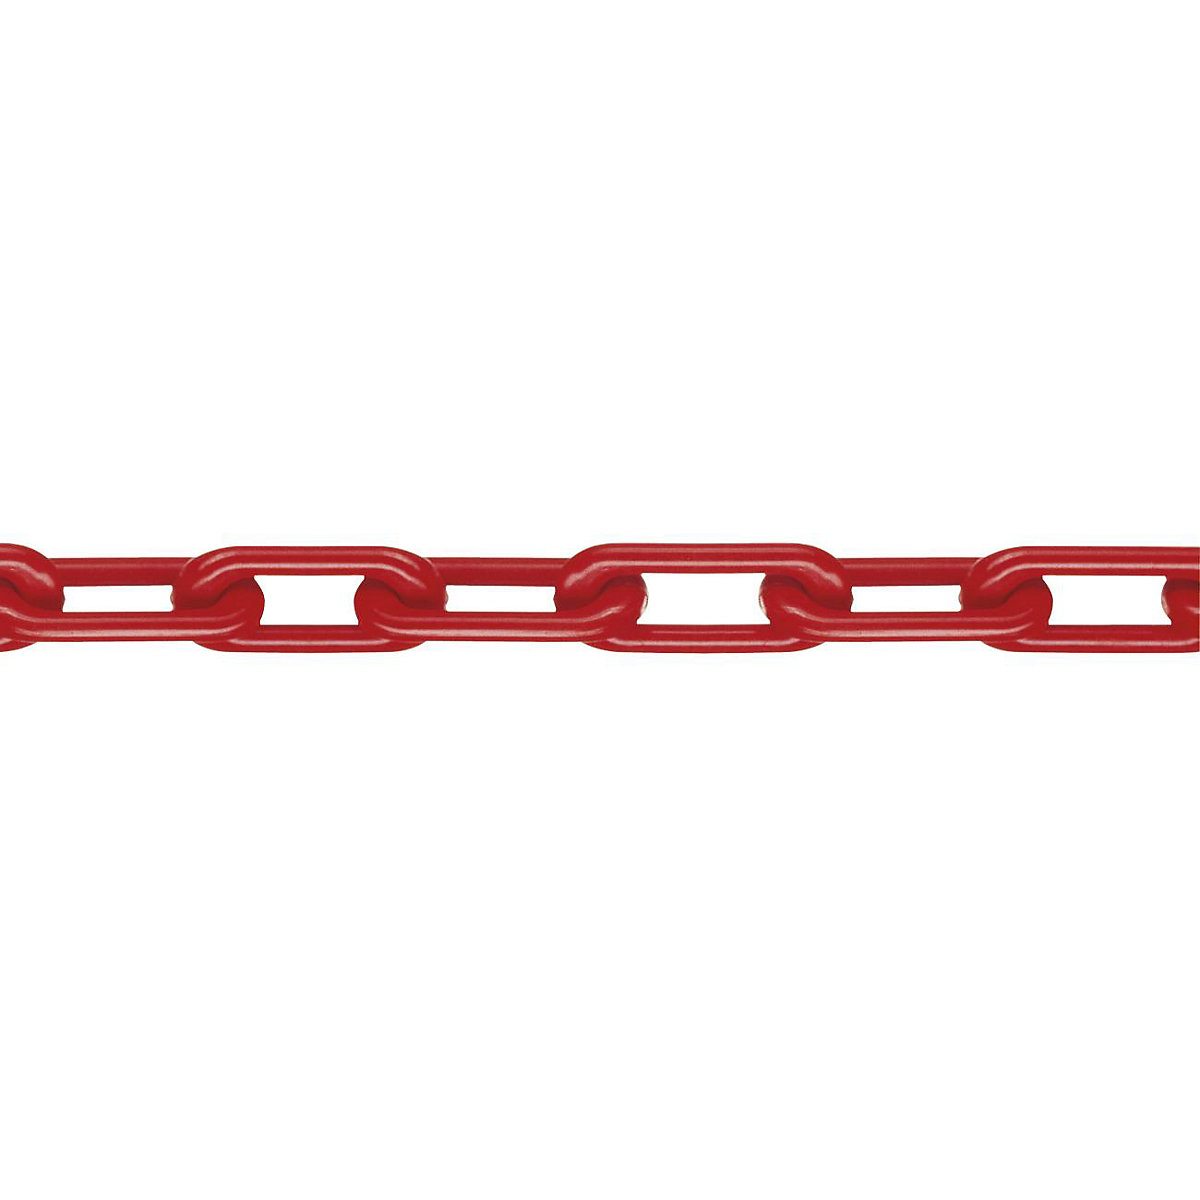 Nylon-kwaliteitsketting, MNK-kwaliteit 8, lengte 25 m, rood-7